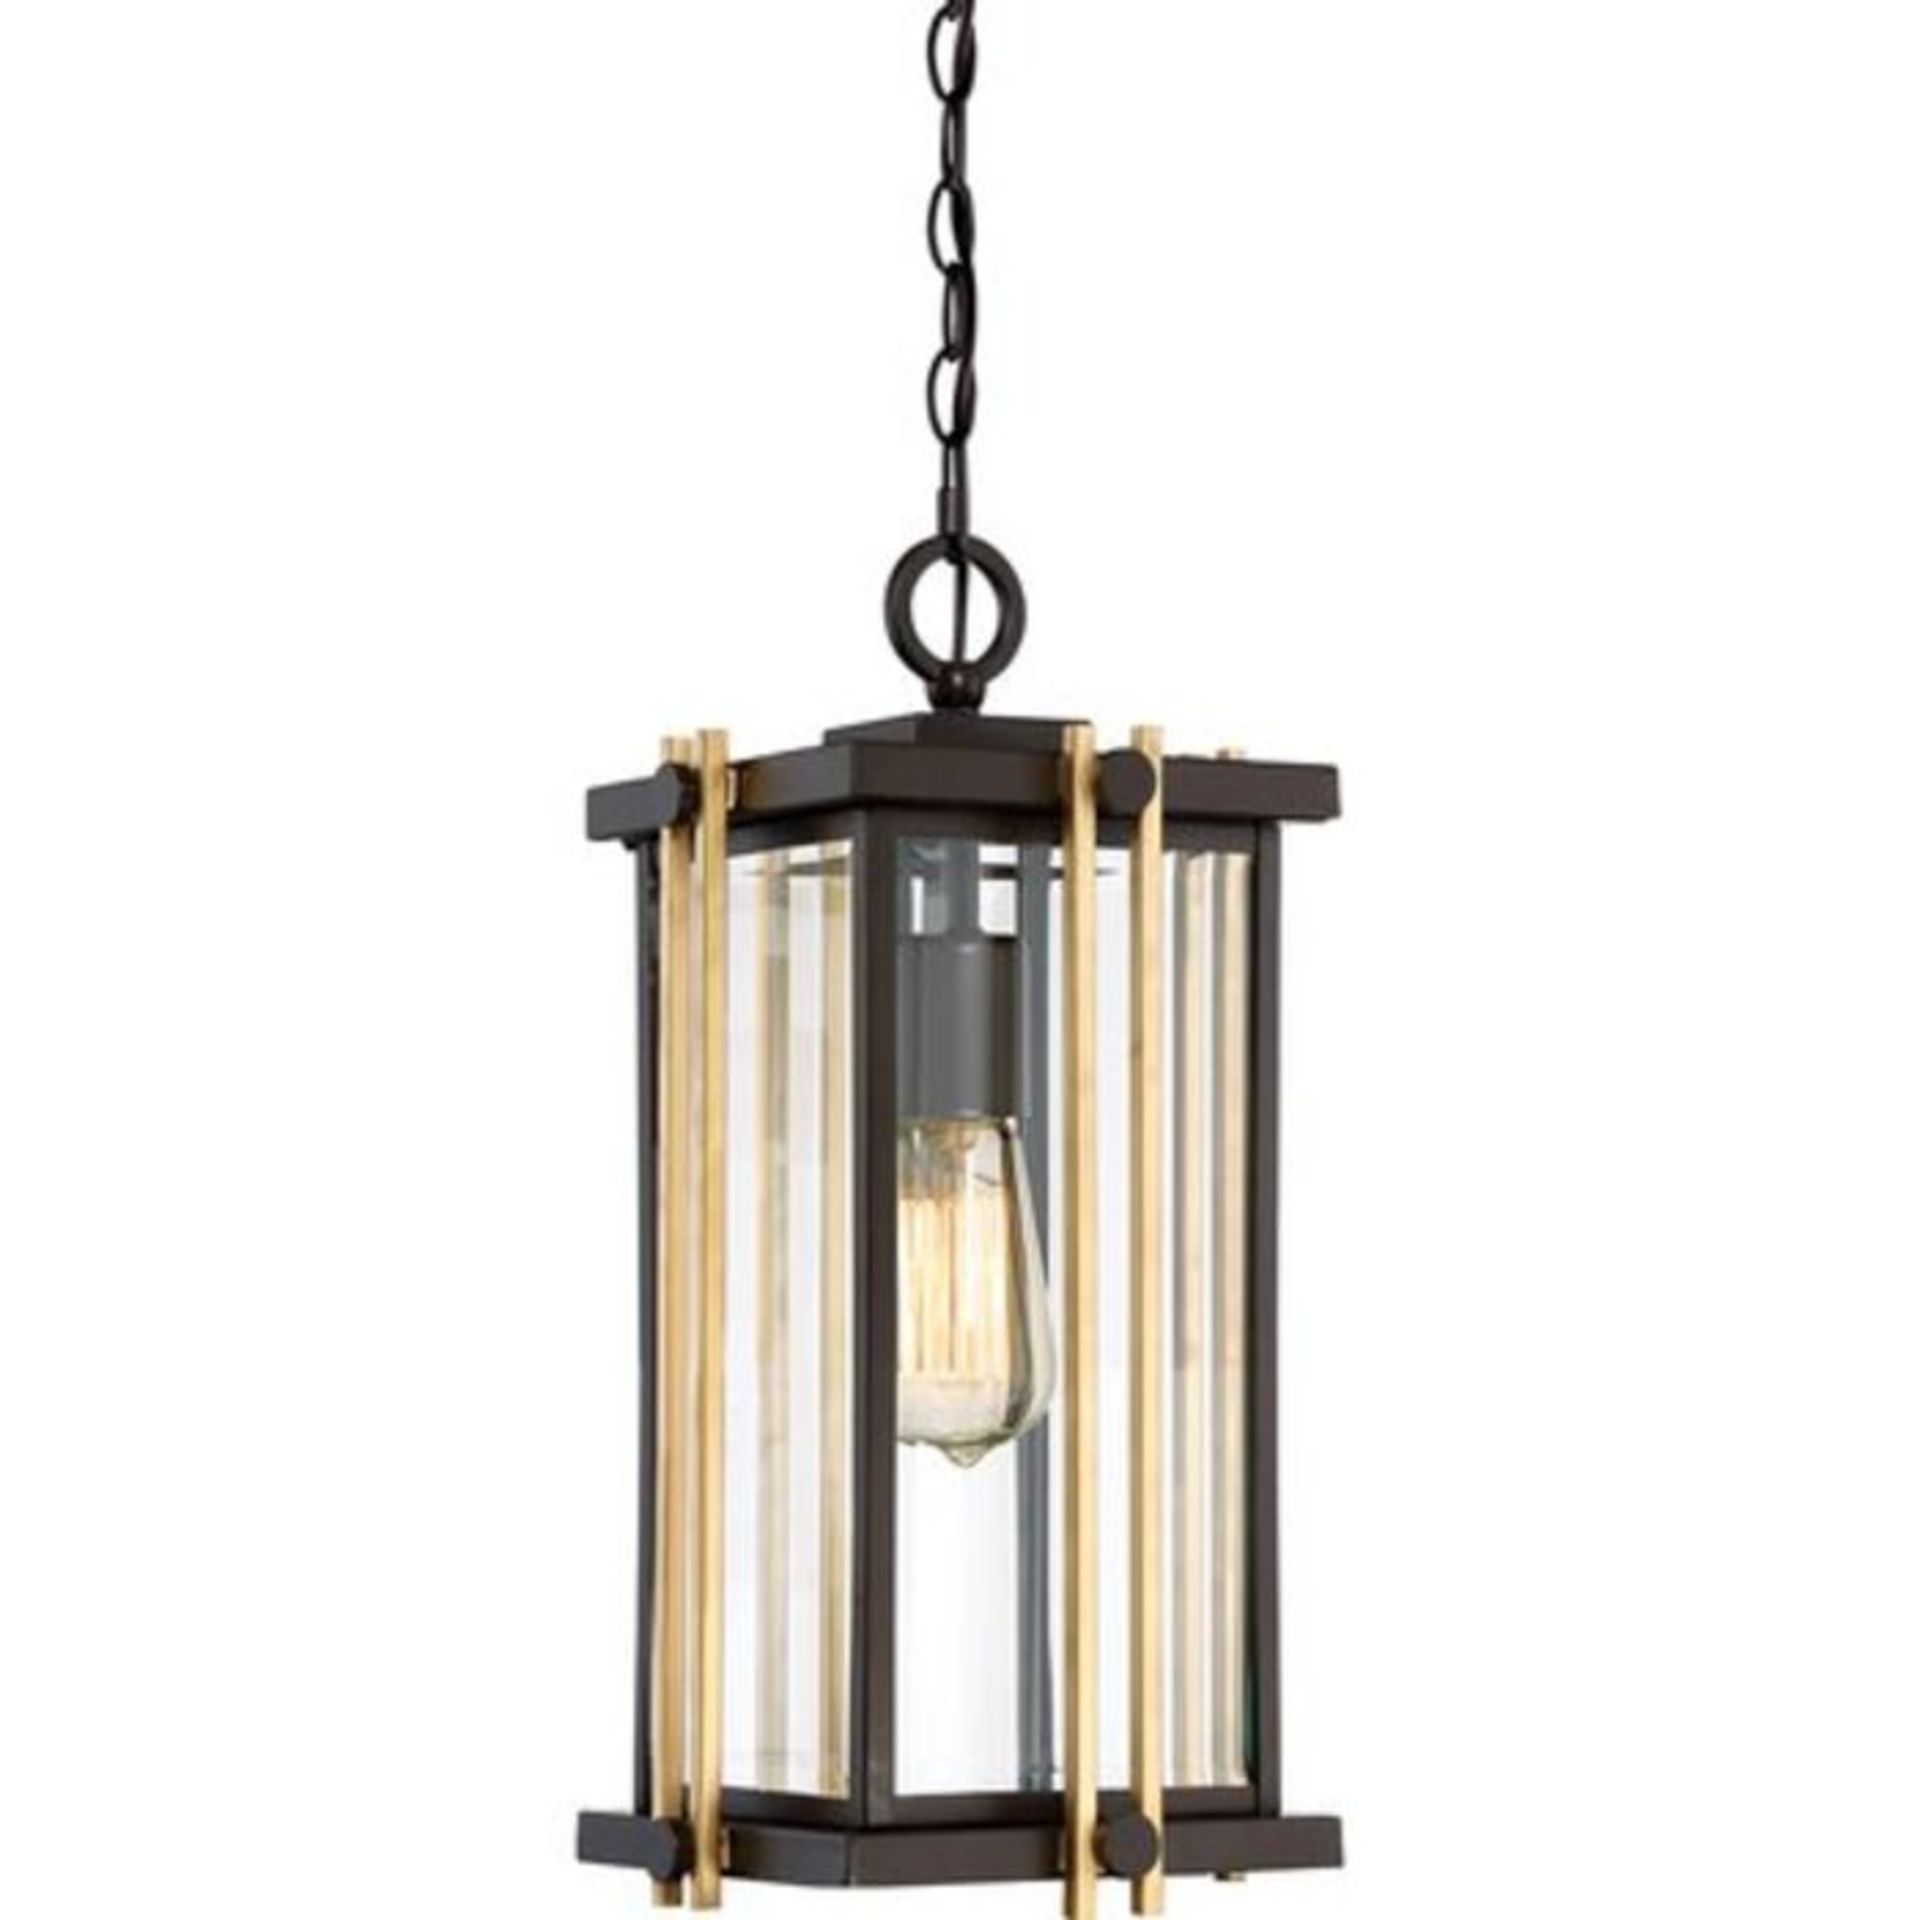 Dakota Fields, Winward 1 Light Outdoor Hanging Lantern (WESTERN BRONZE FINISH) - RRP £129.99 (